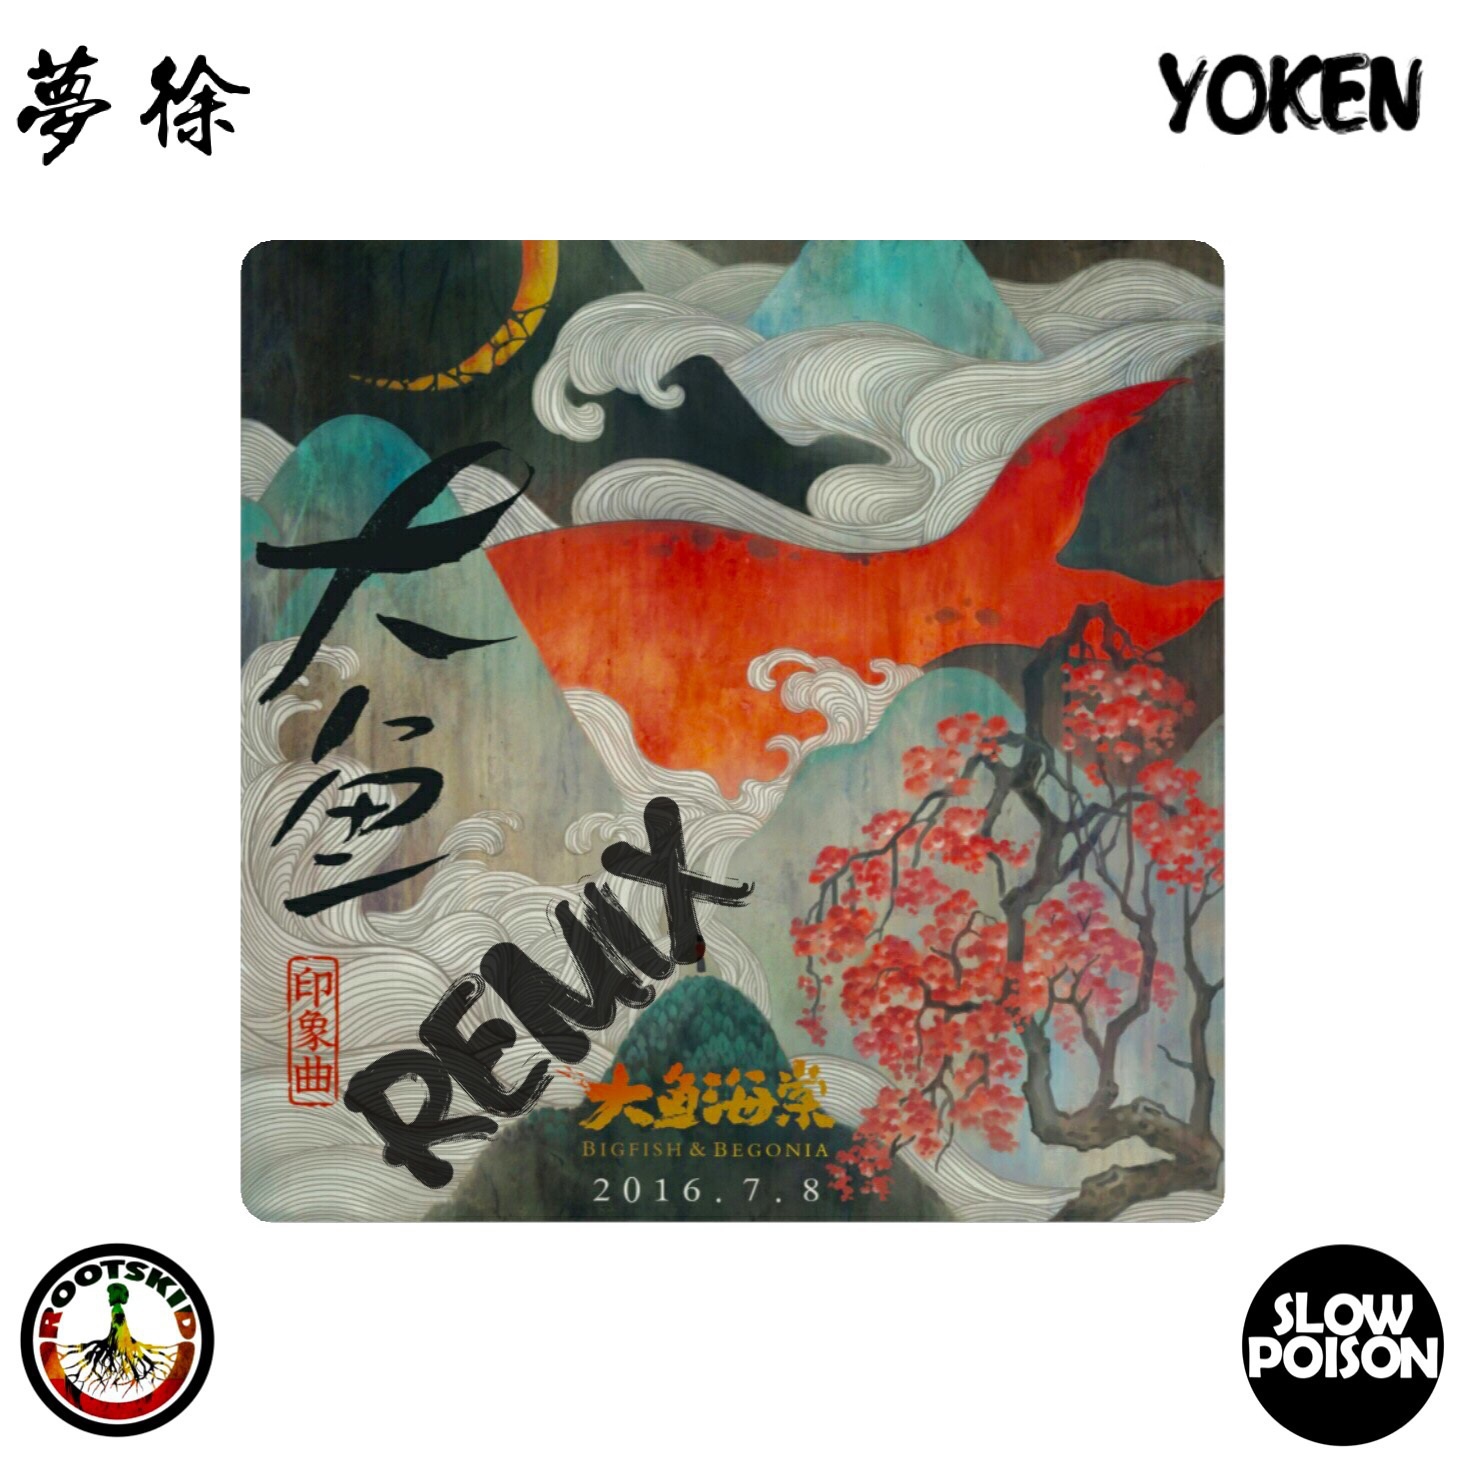 da yu Remix Prod. by Yoken